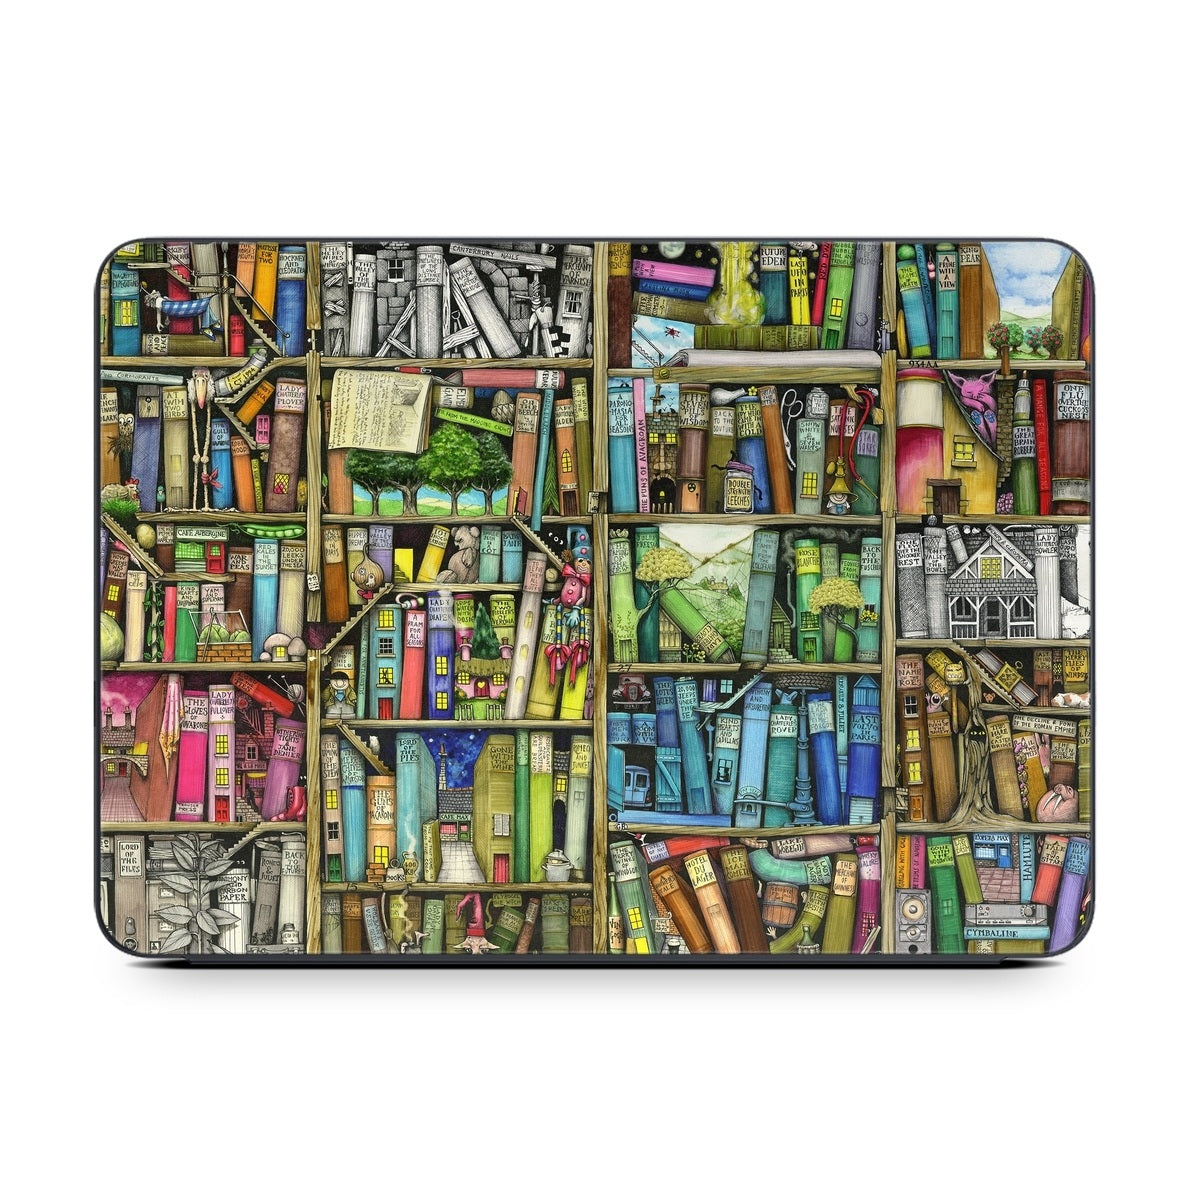 Bookshelf - Apple Smart Keyboard Folio Skin